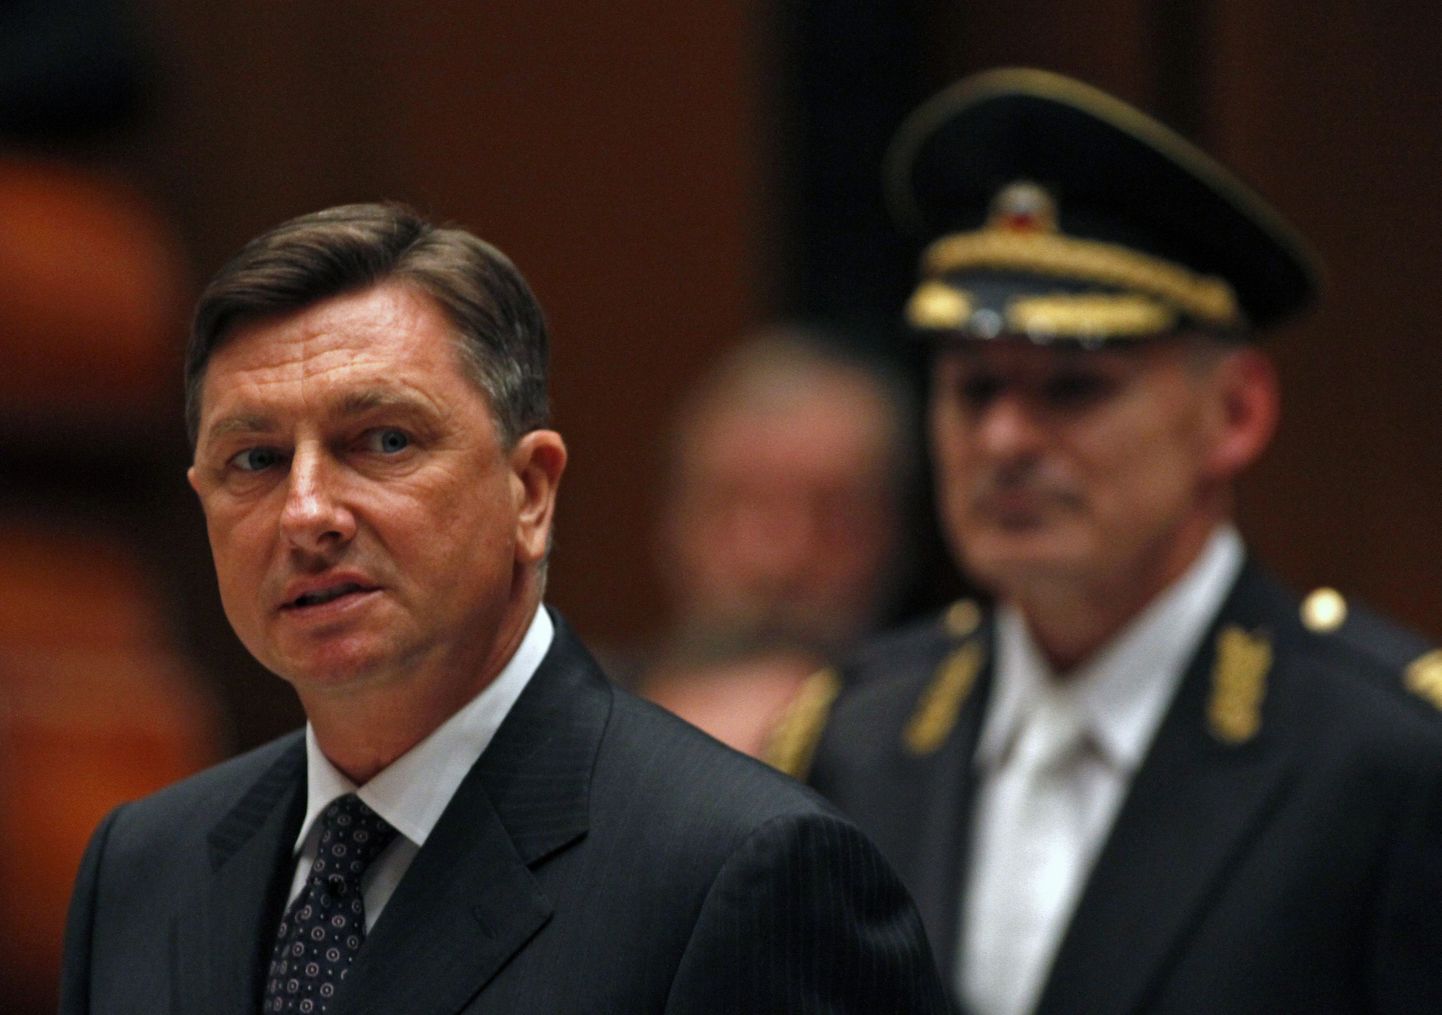 Sloveenia president Borut Pahor